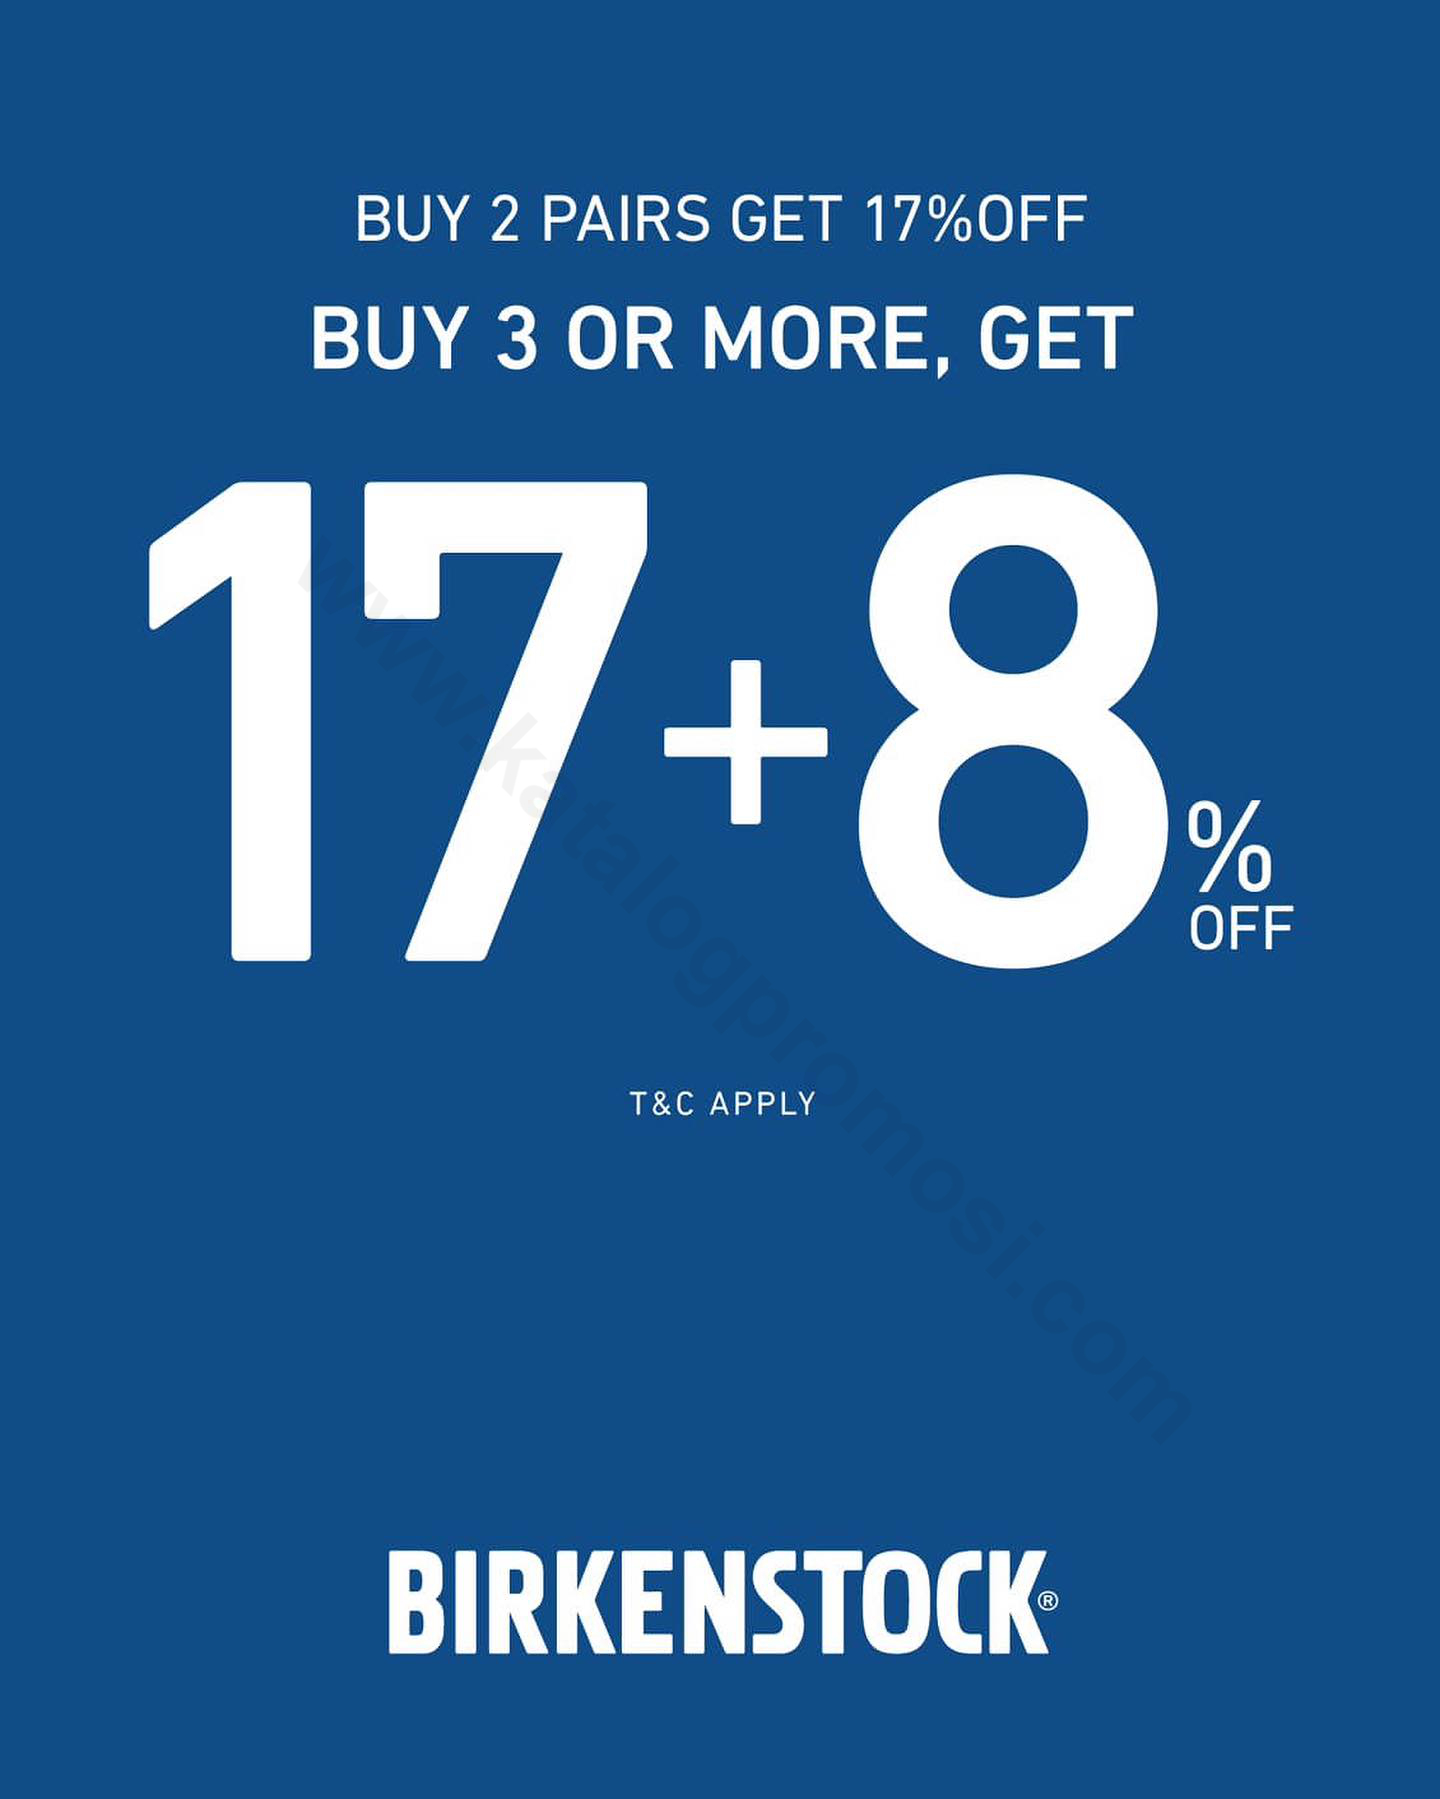 BIRKENSTOCK Promo Buy 2 Pairs Get 17 Off, Buy 3 Or More Get 17 + 8 Off*